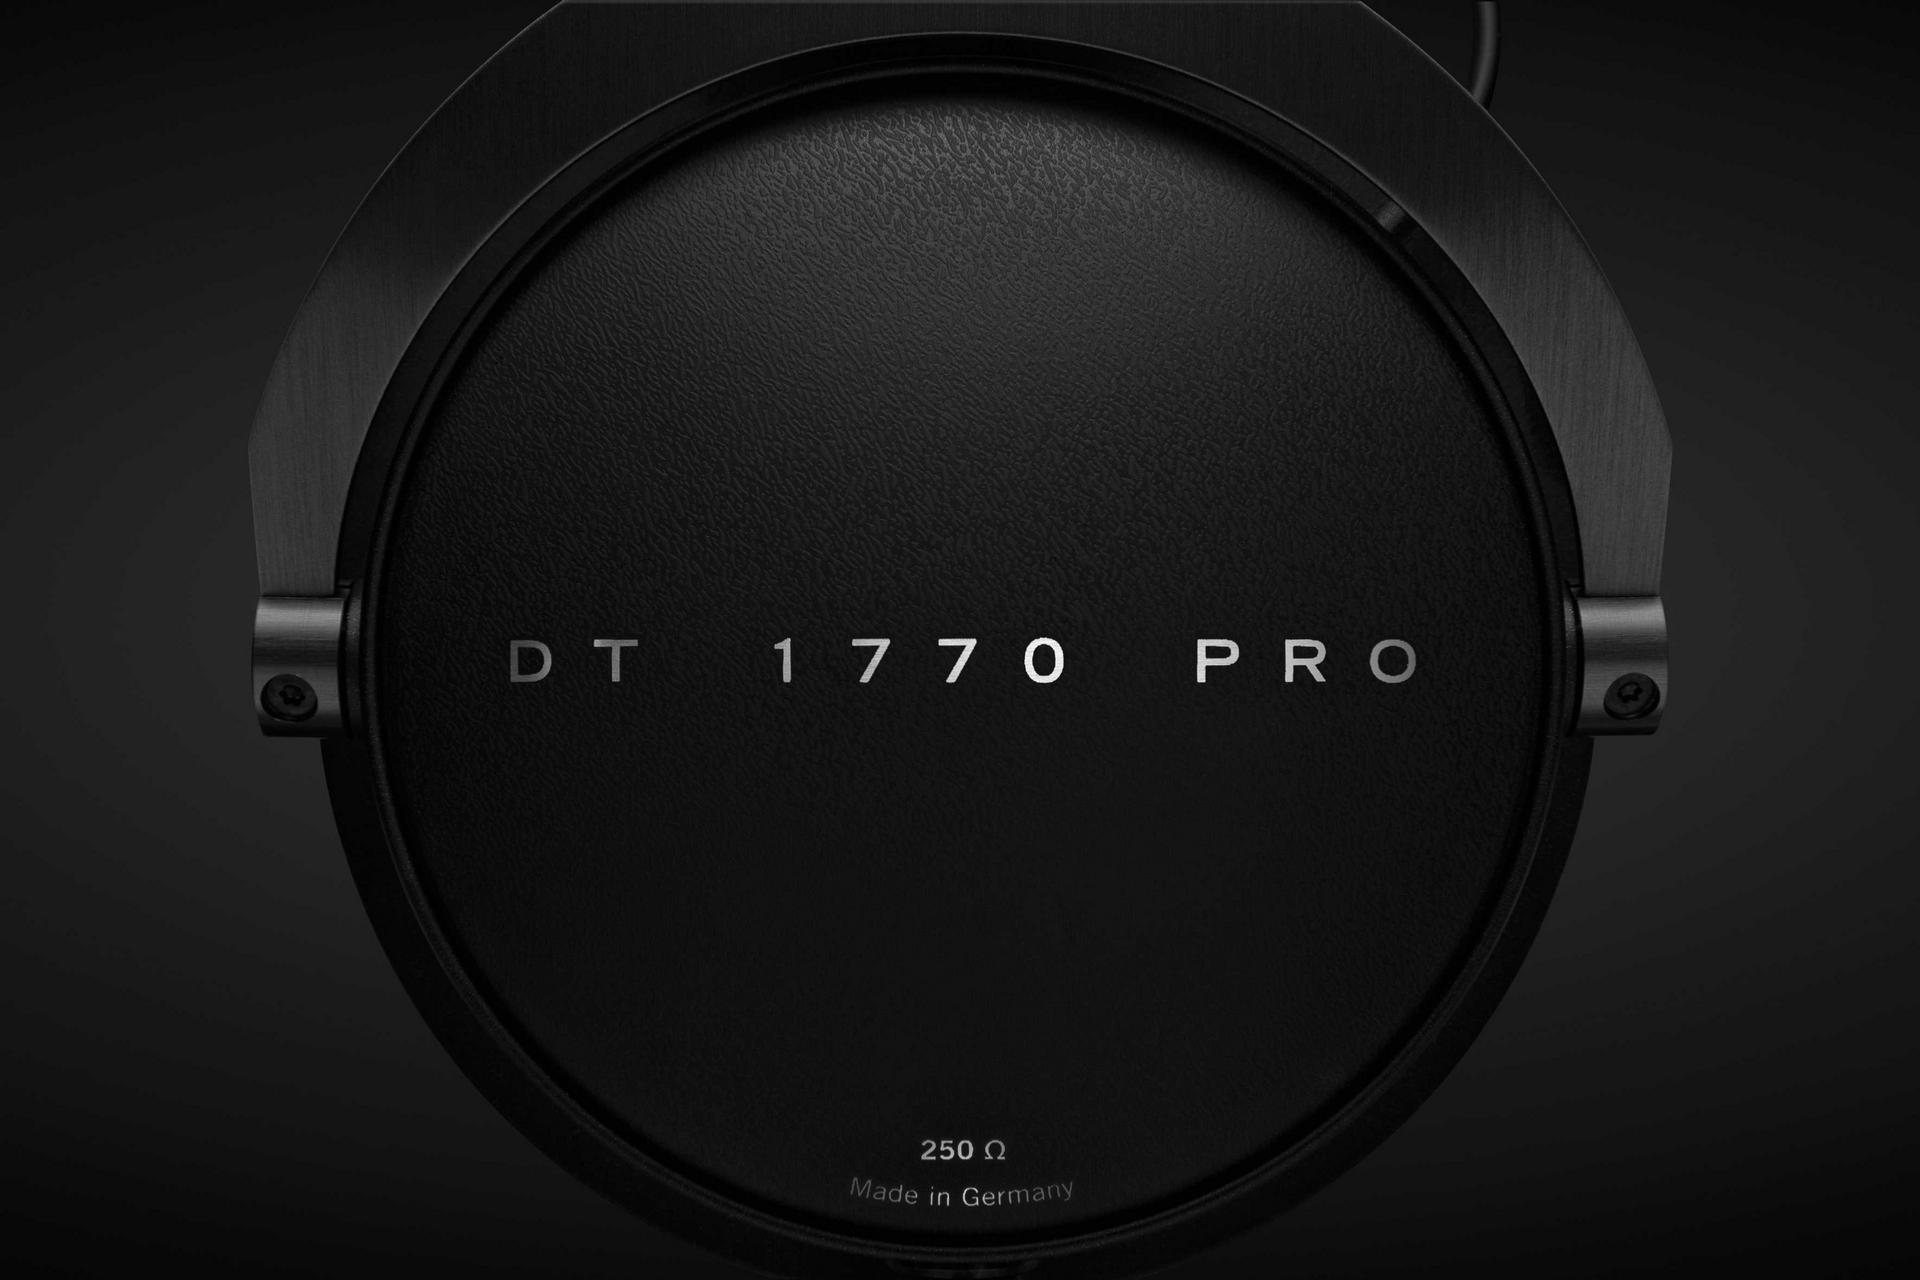 Beyerdynamic DT 1770 Pro